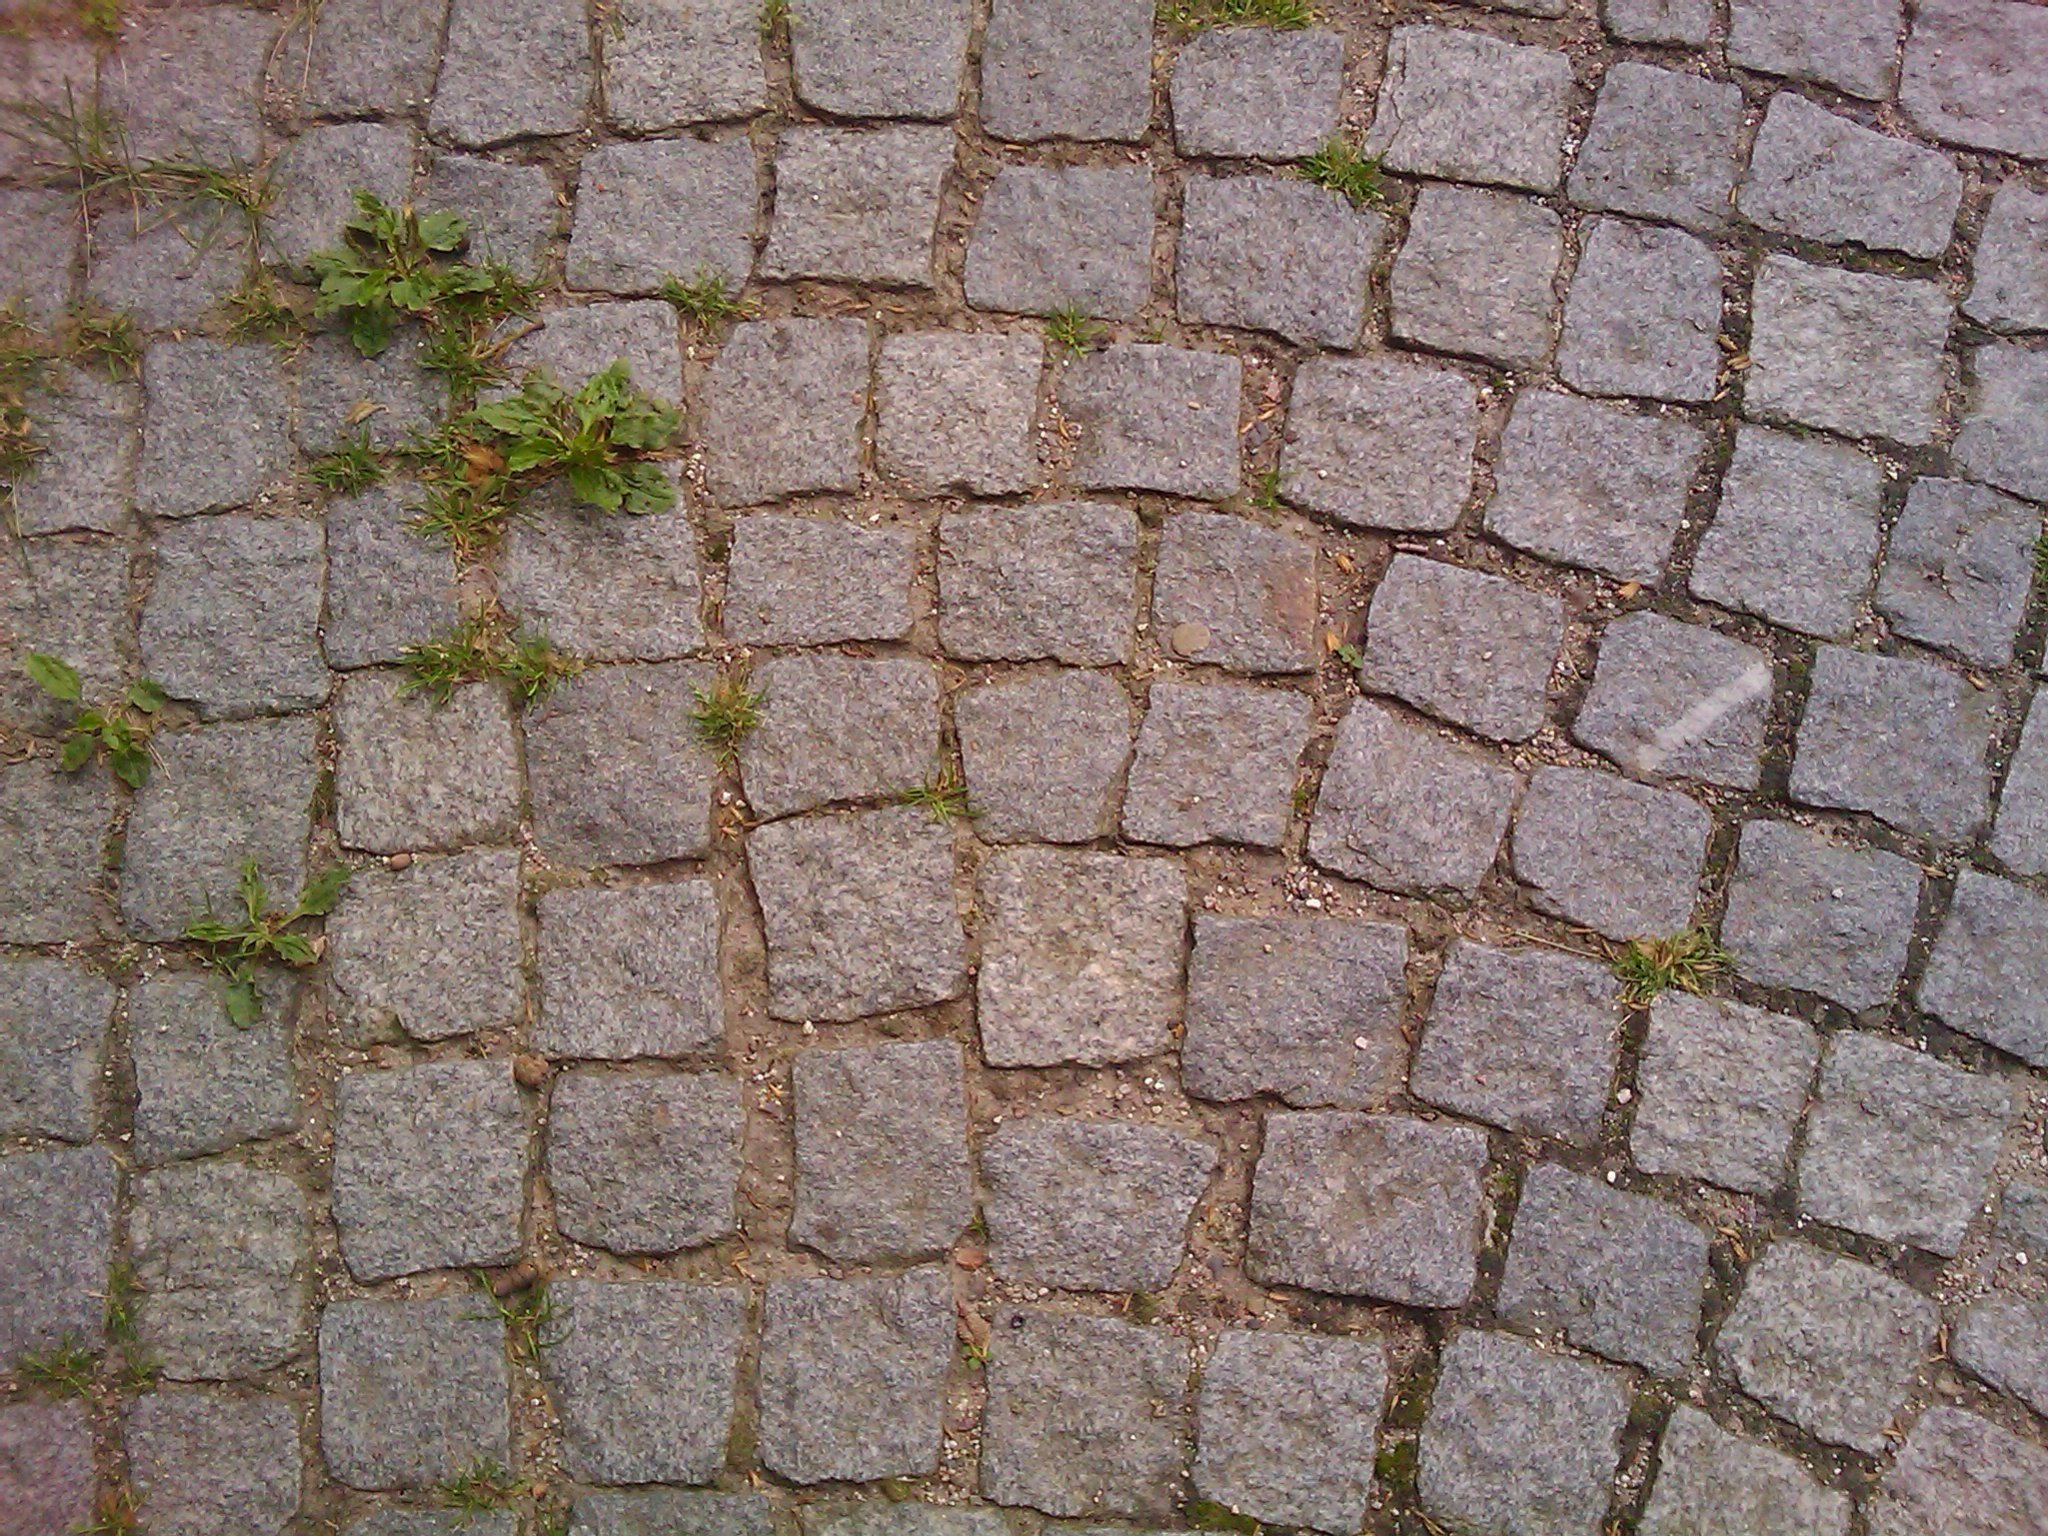 Ground stone